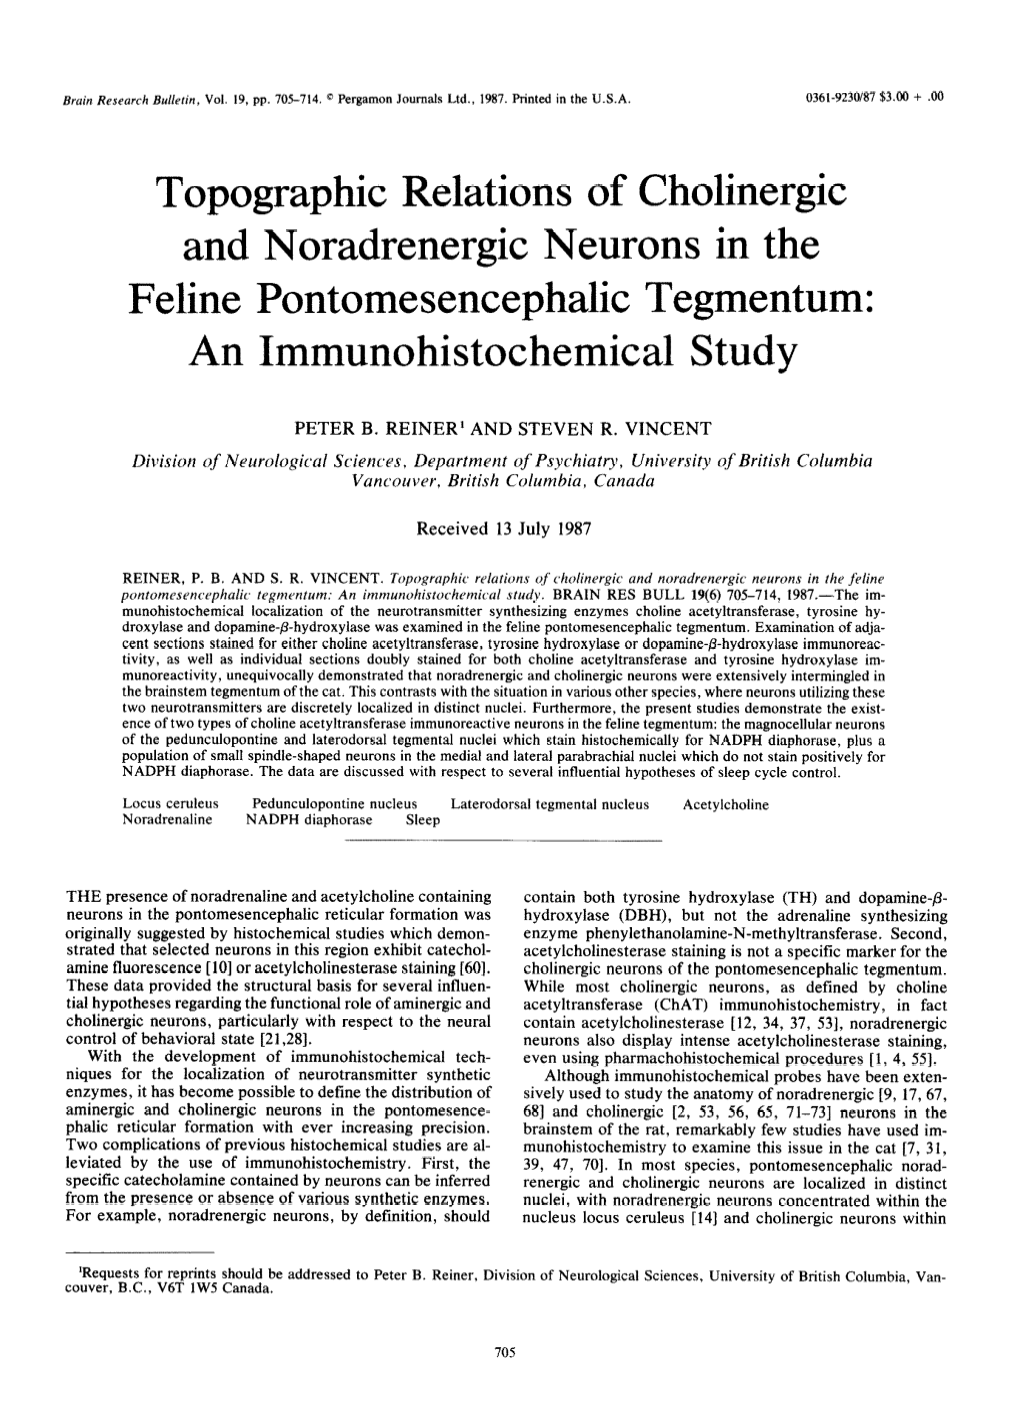 Topographic Relations of Cholinergic and Noradrenergic Neurons in the Feline Pontomesencephalic Tegmentum: an Immunohistochemical Study